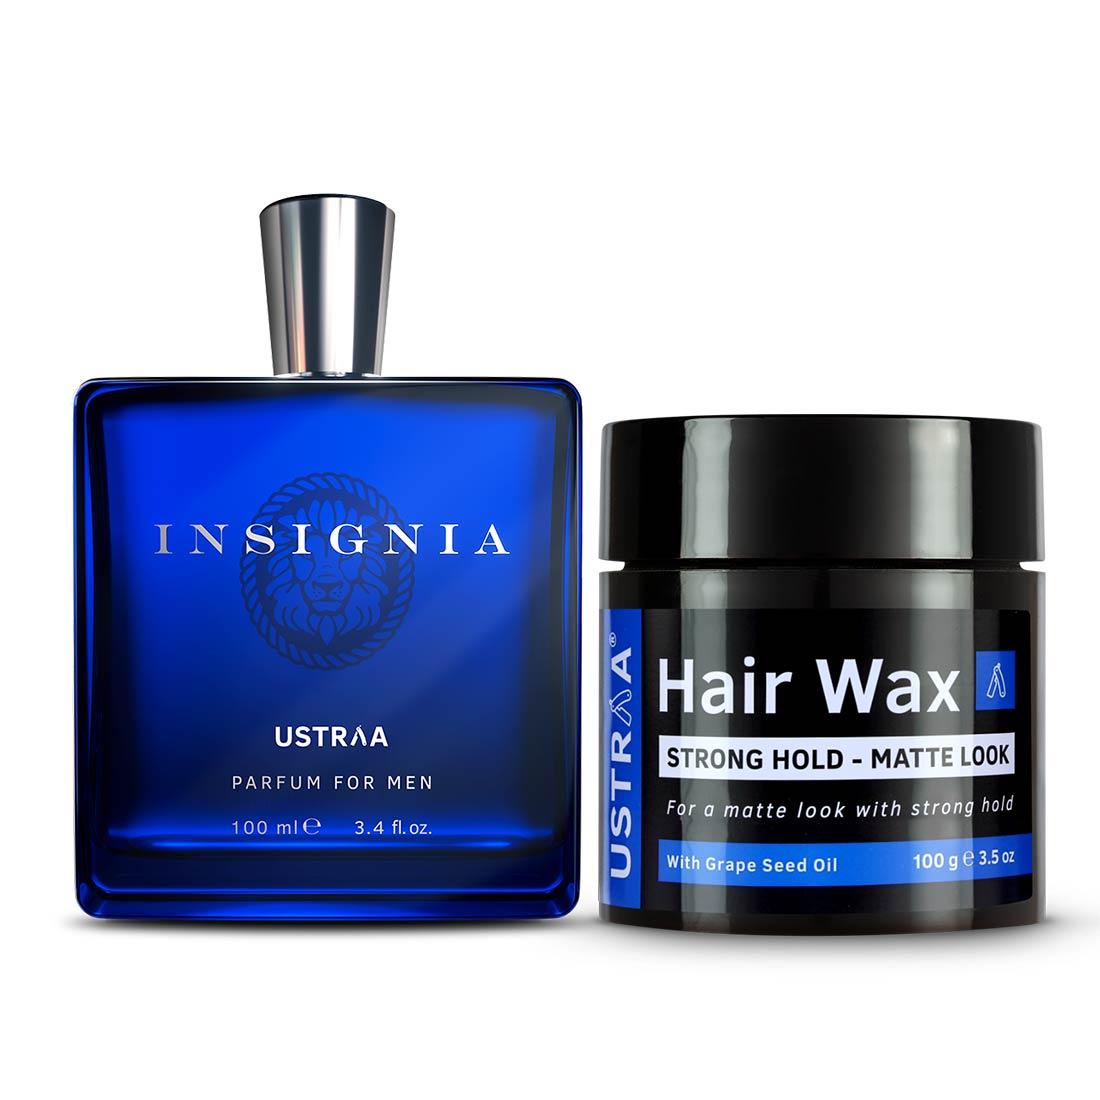 Ustraa Insignia Perfume + Hair Wax- Matte Look Combo For Men: (Set of 2)